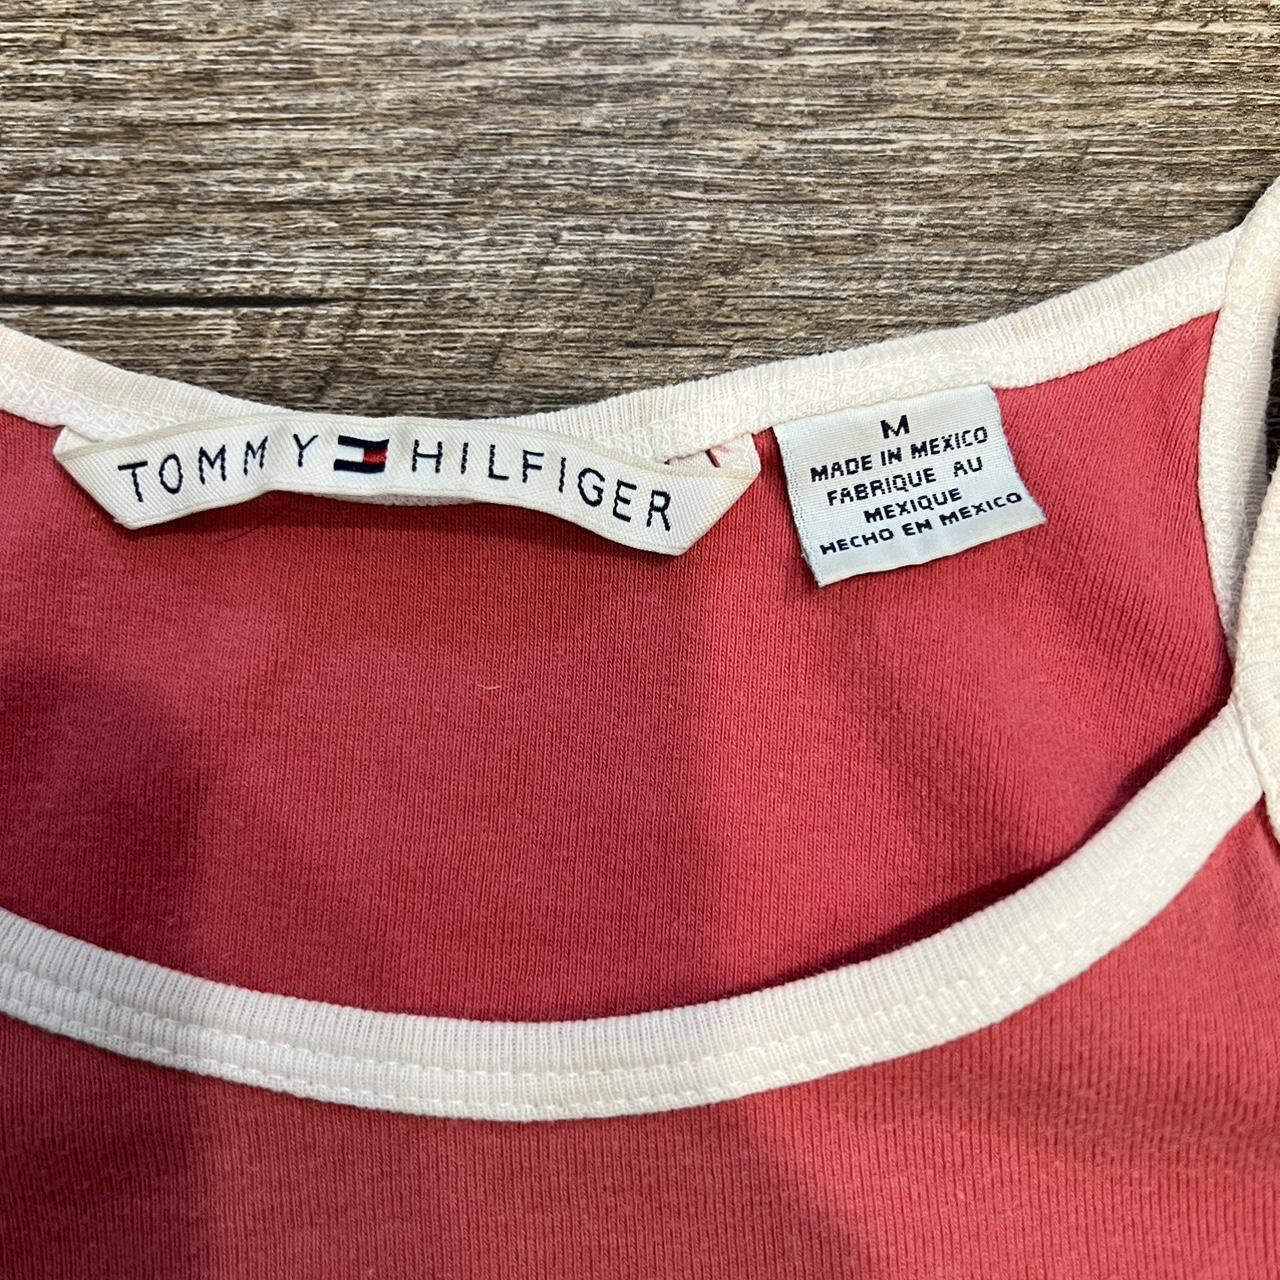 Tommy Hilfiger Women's Pink and White Vests-tanks-camis | Depop